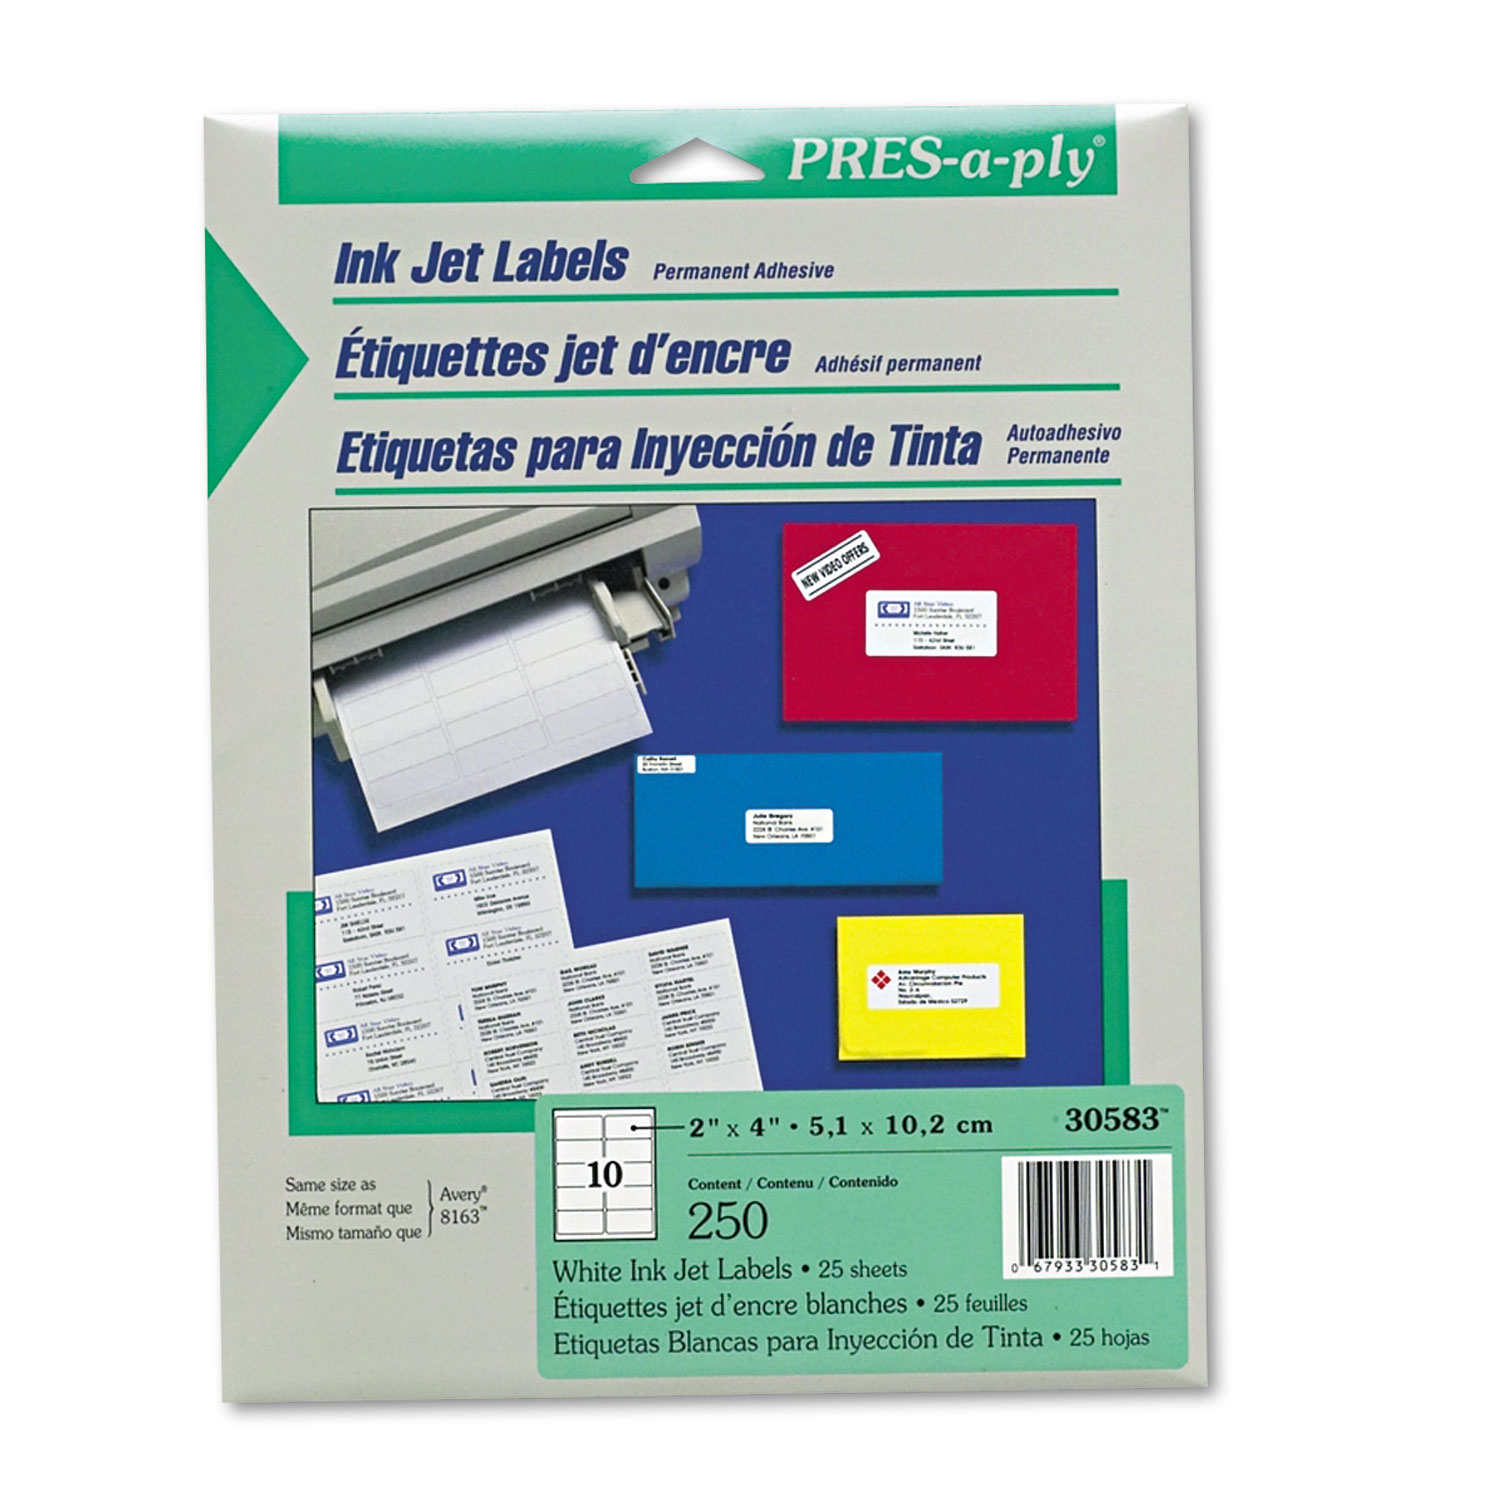 laser inkjet labels avery template 8167